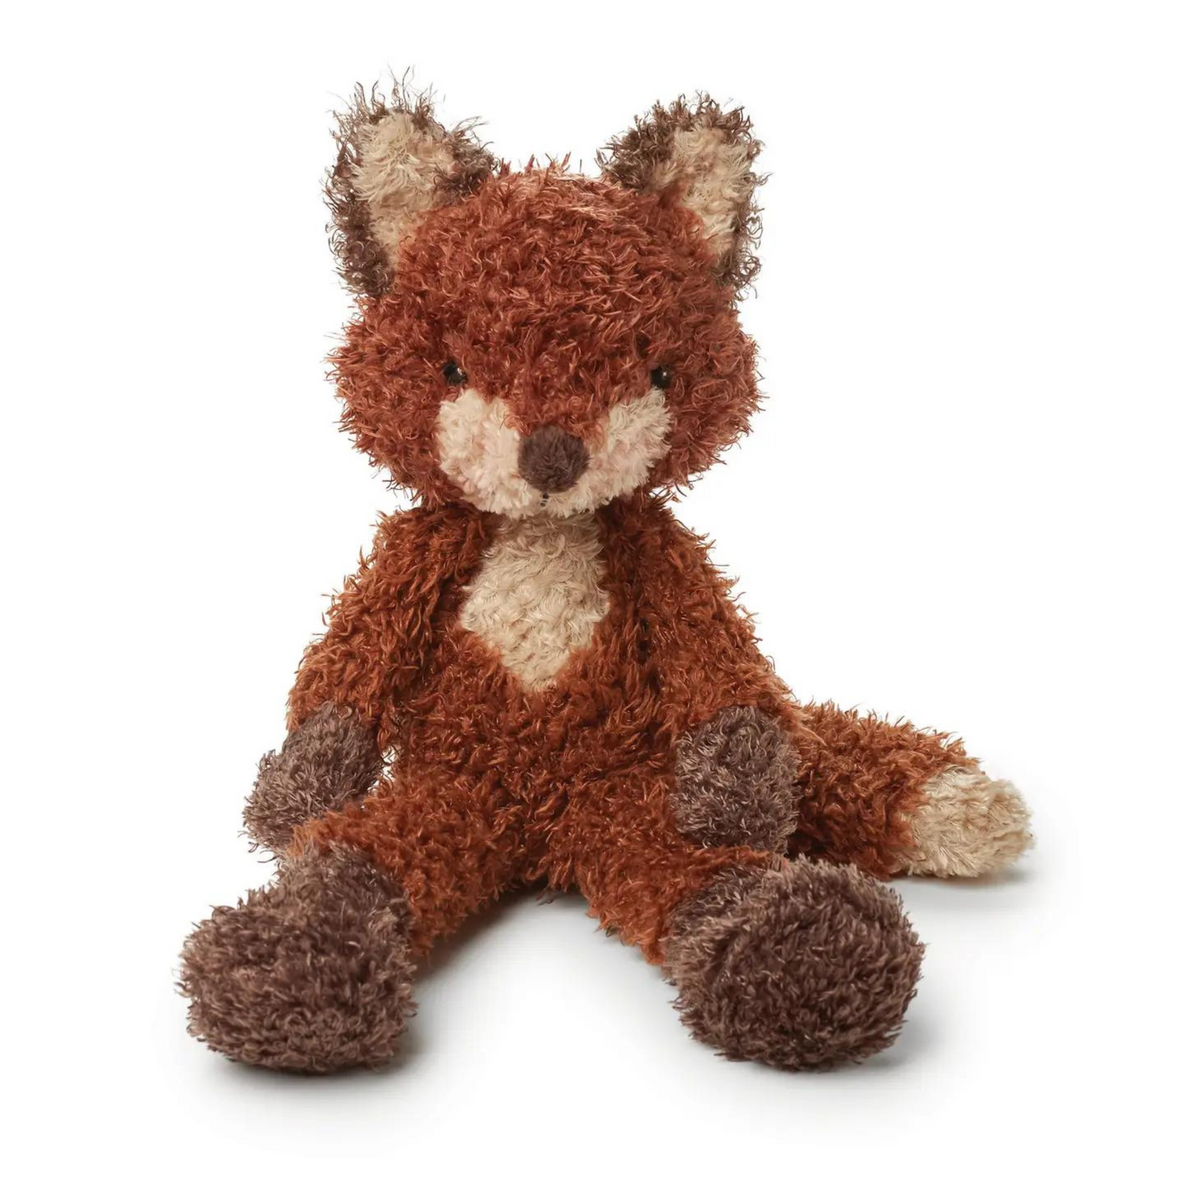 Foxy the Fox Stuffed Animal